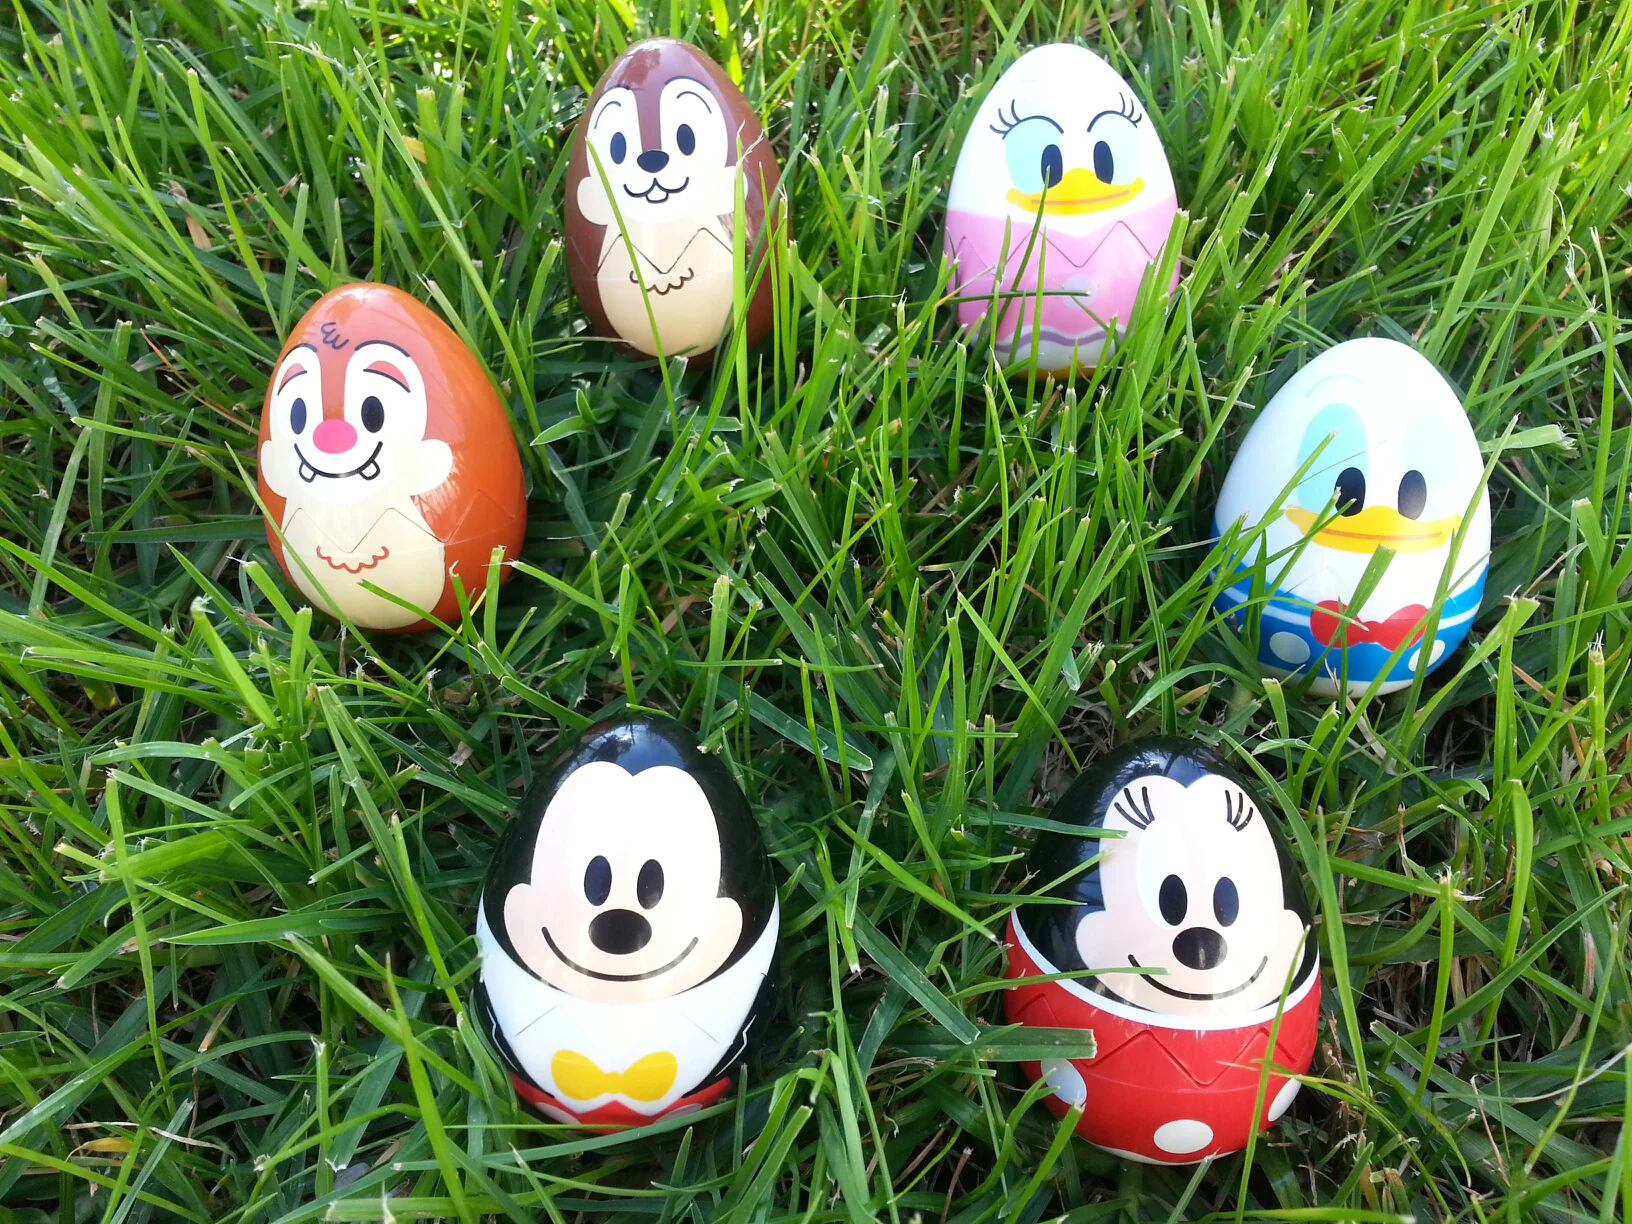 Easter Egg-Stravaganza Egg Hunt Rolls Into Epcot Epcot 2